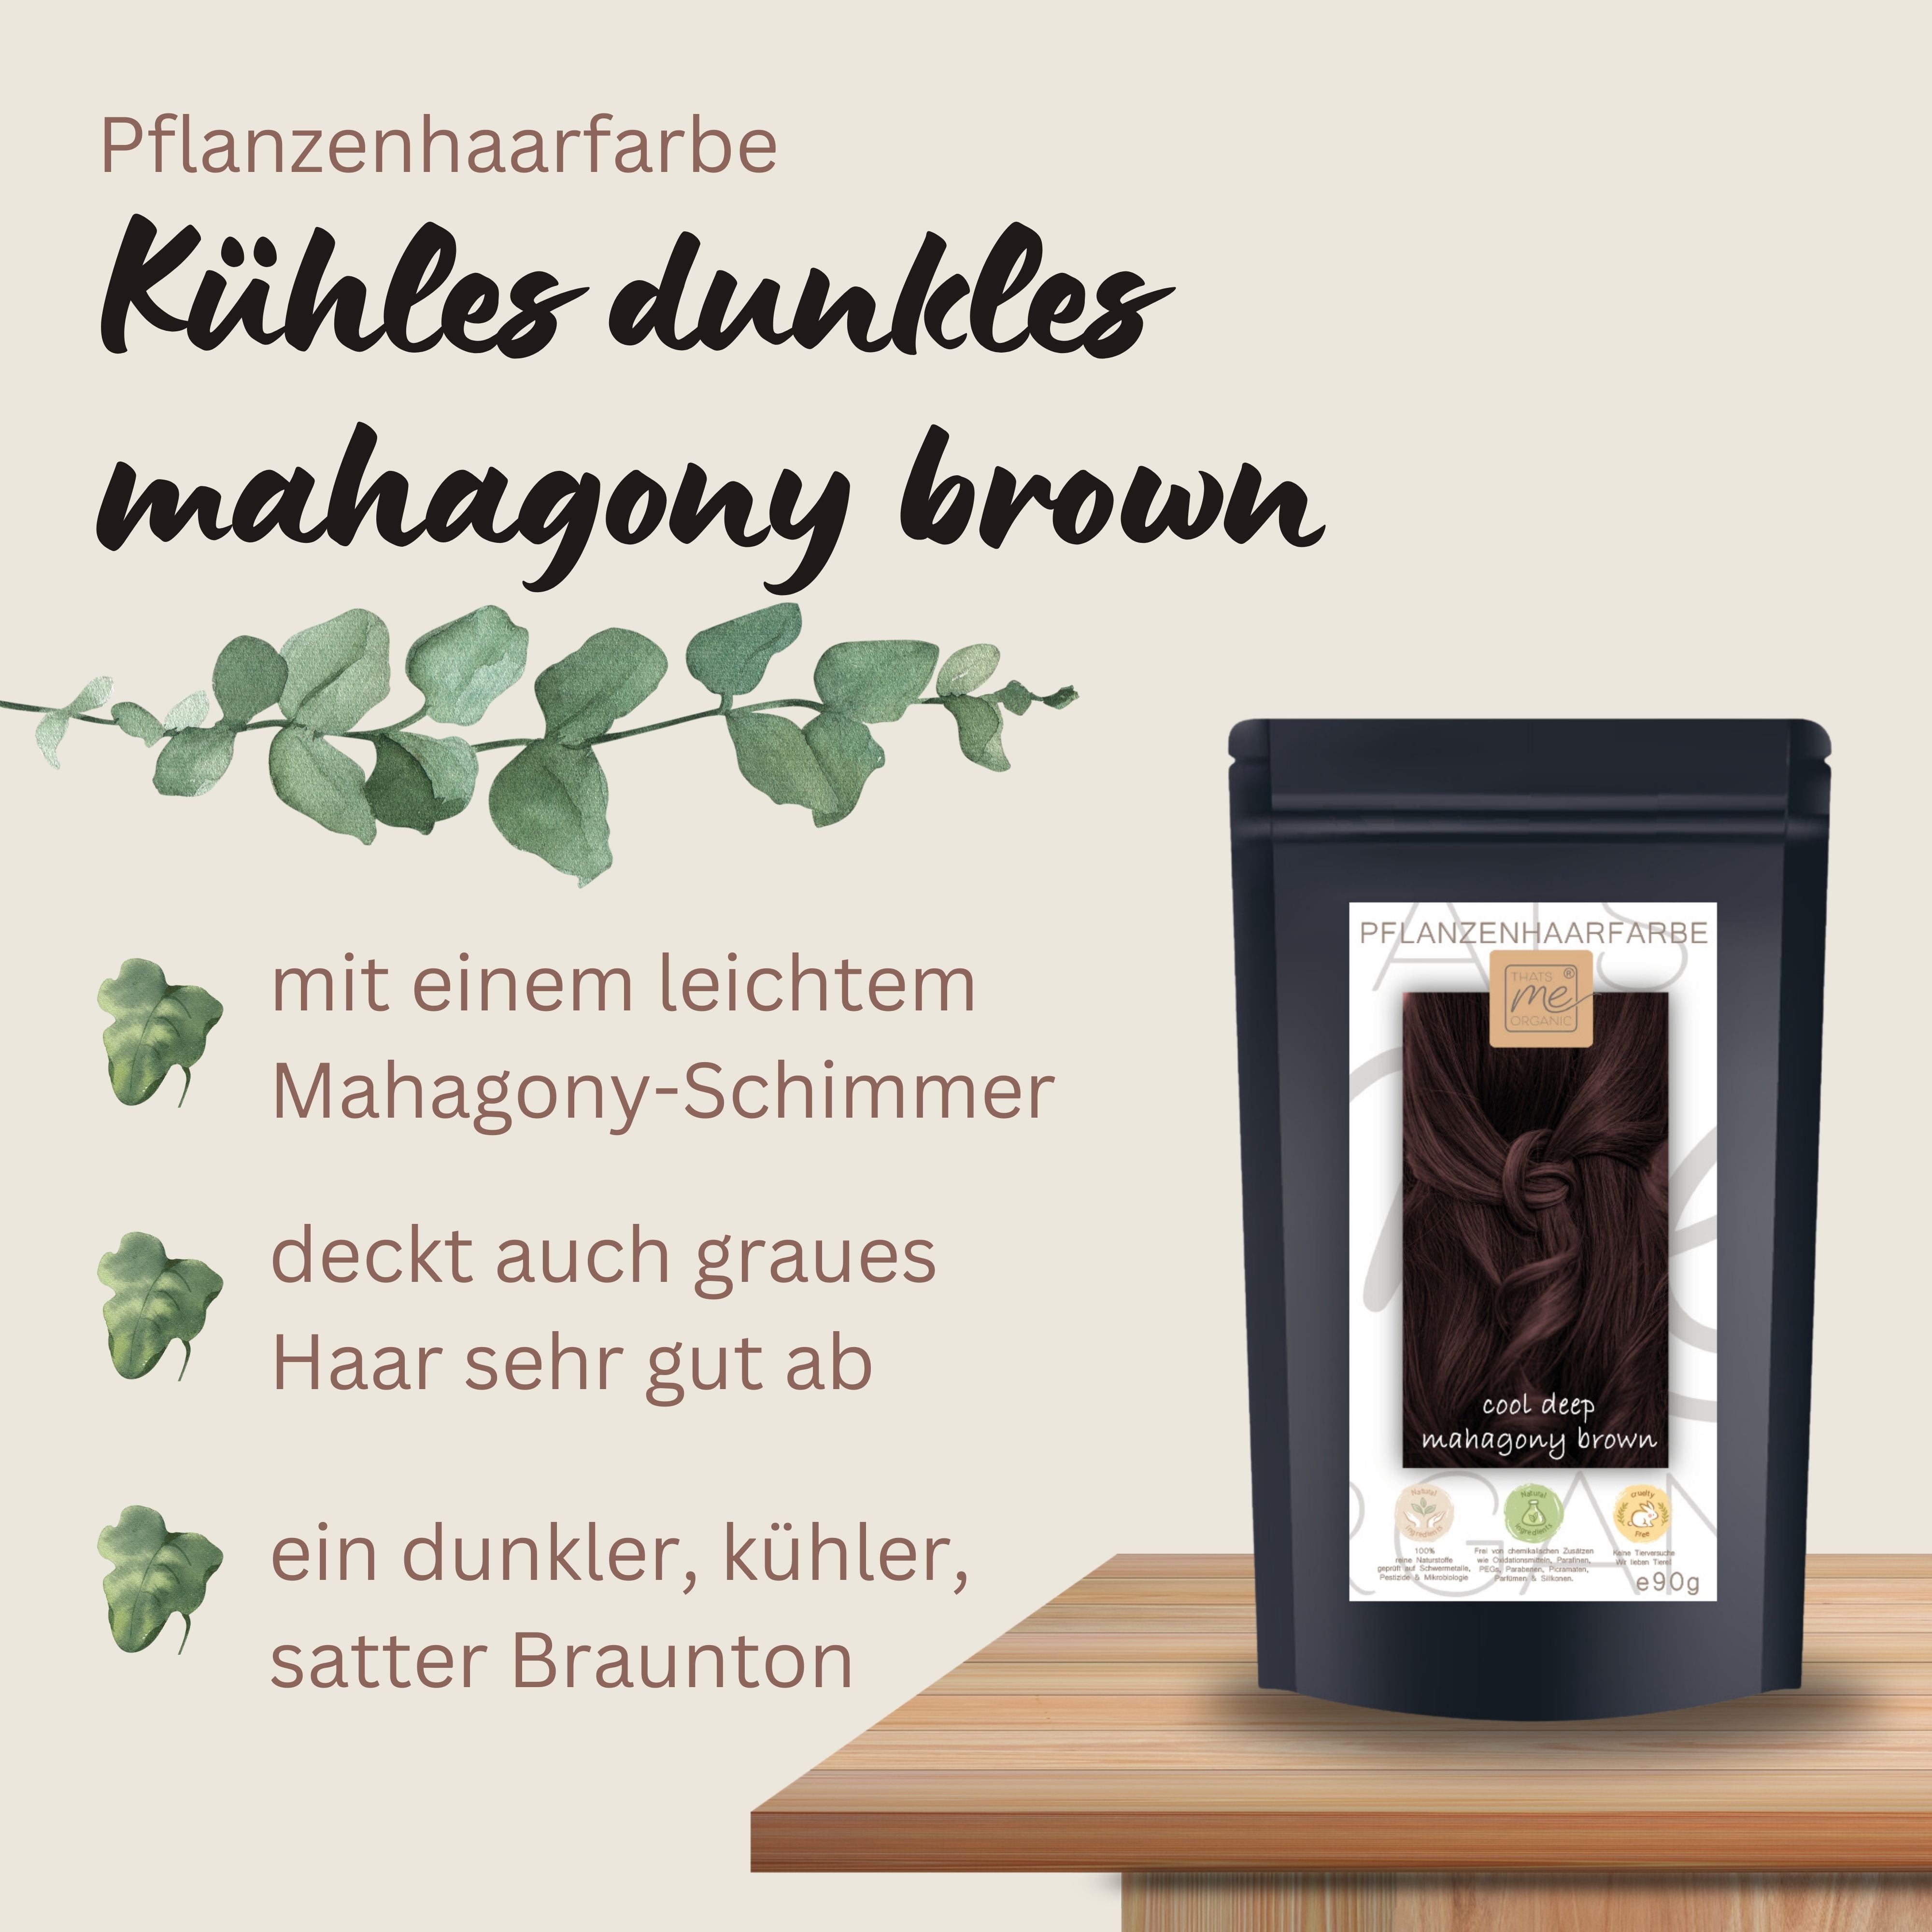 Profi-Pflanzenhaarfarbe SET kühles dunkles Mahagony-Braun "cool deep mahagony brown"